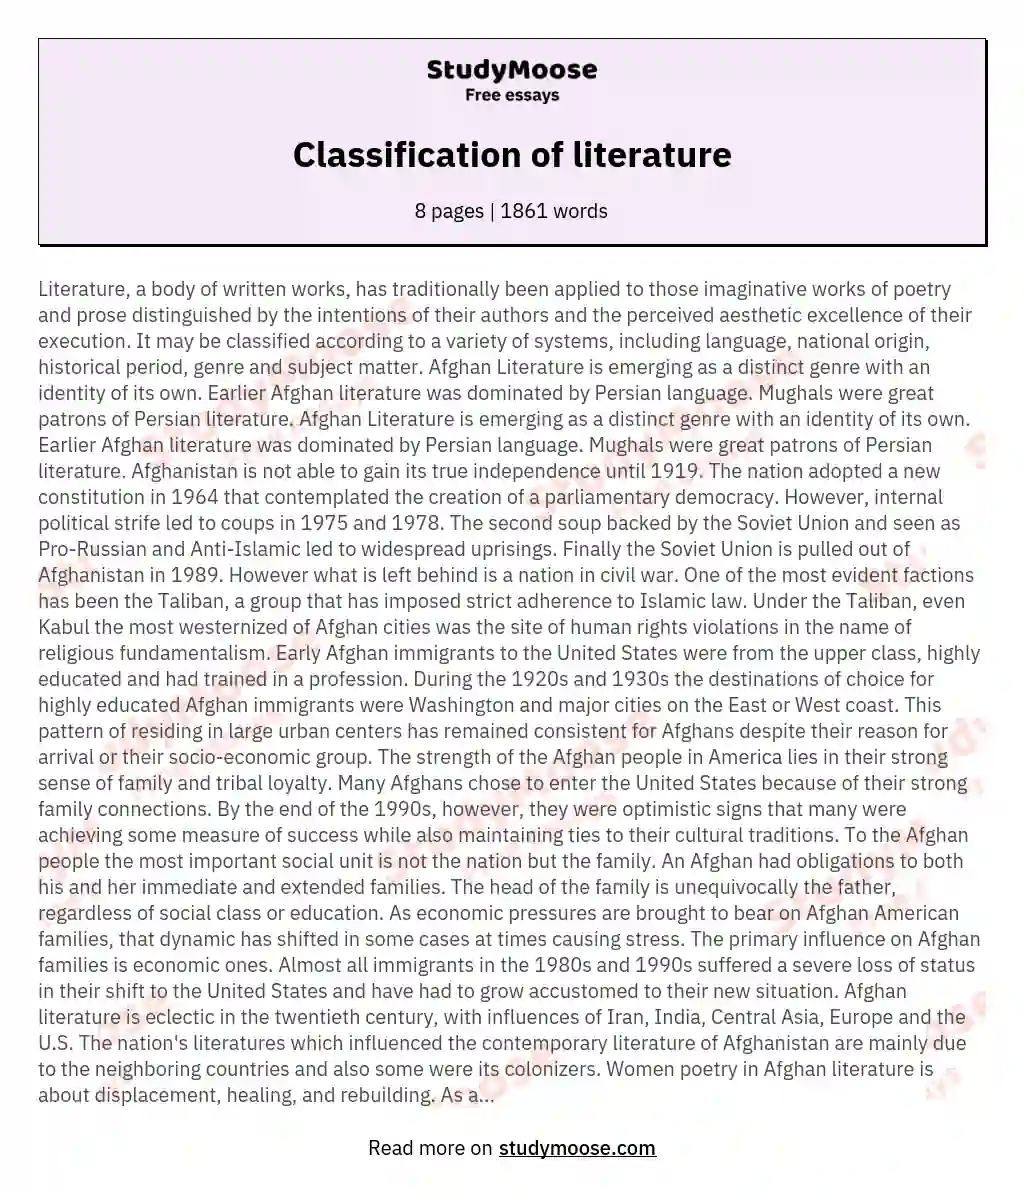 Classification of literature essay